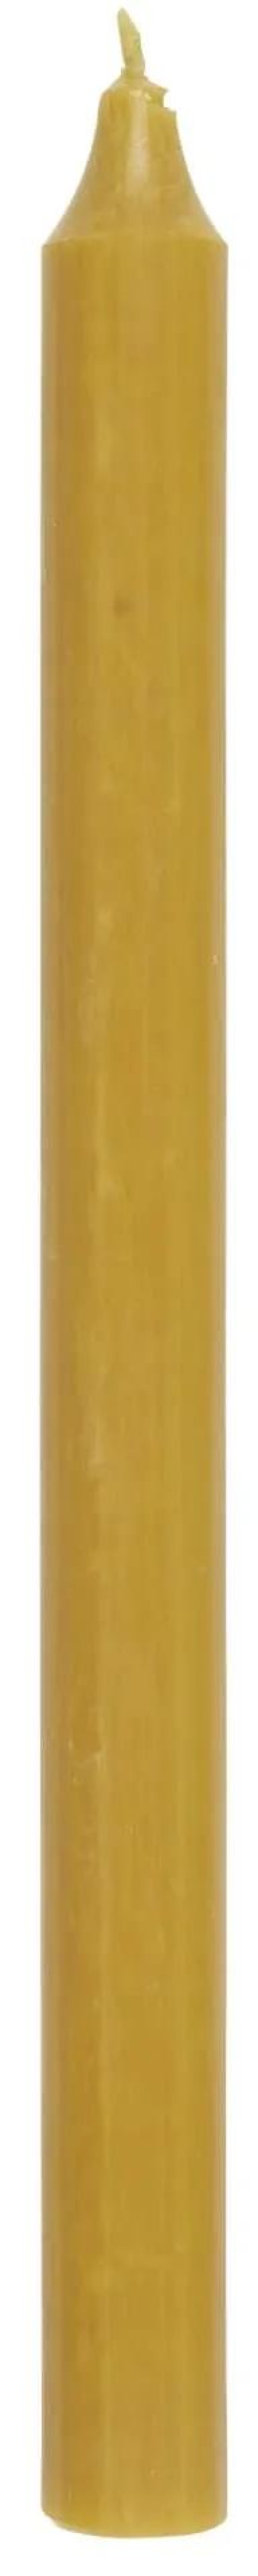 IB LAURSEN Svíčka Curry 29 cm, žlutá barva, vosk